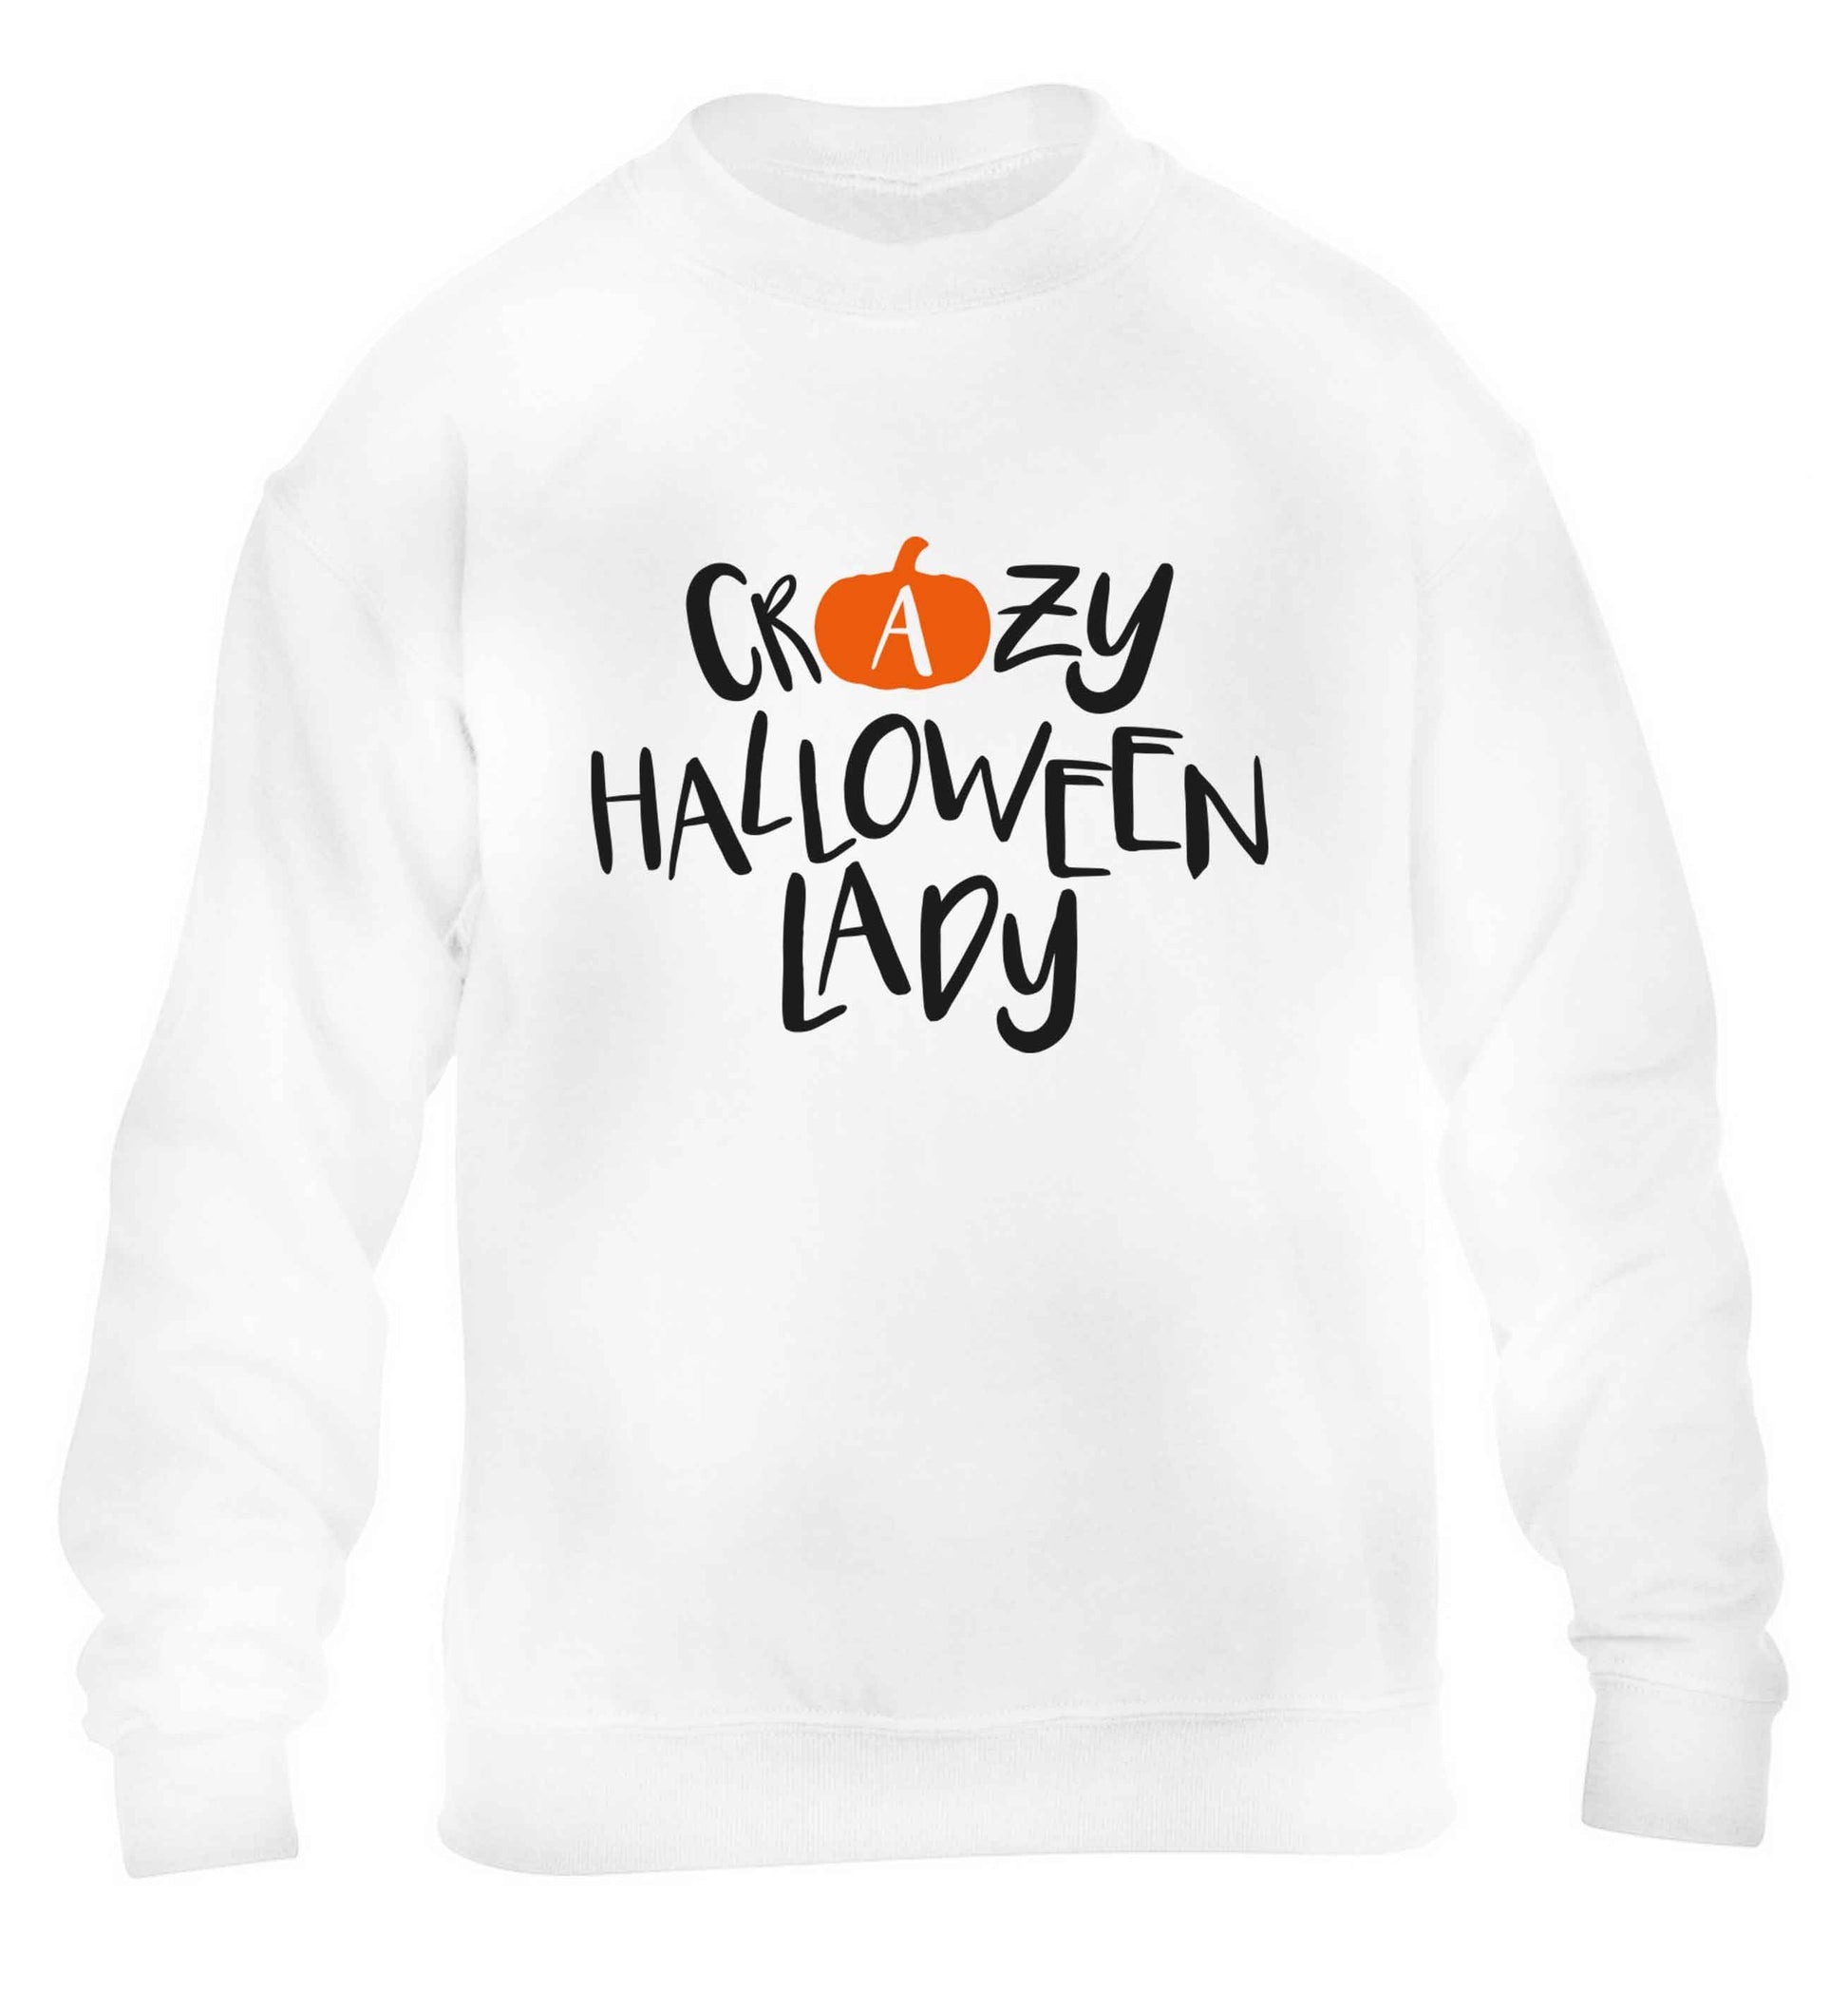 Crazy halloween lady children's white sweater 12-13 Years